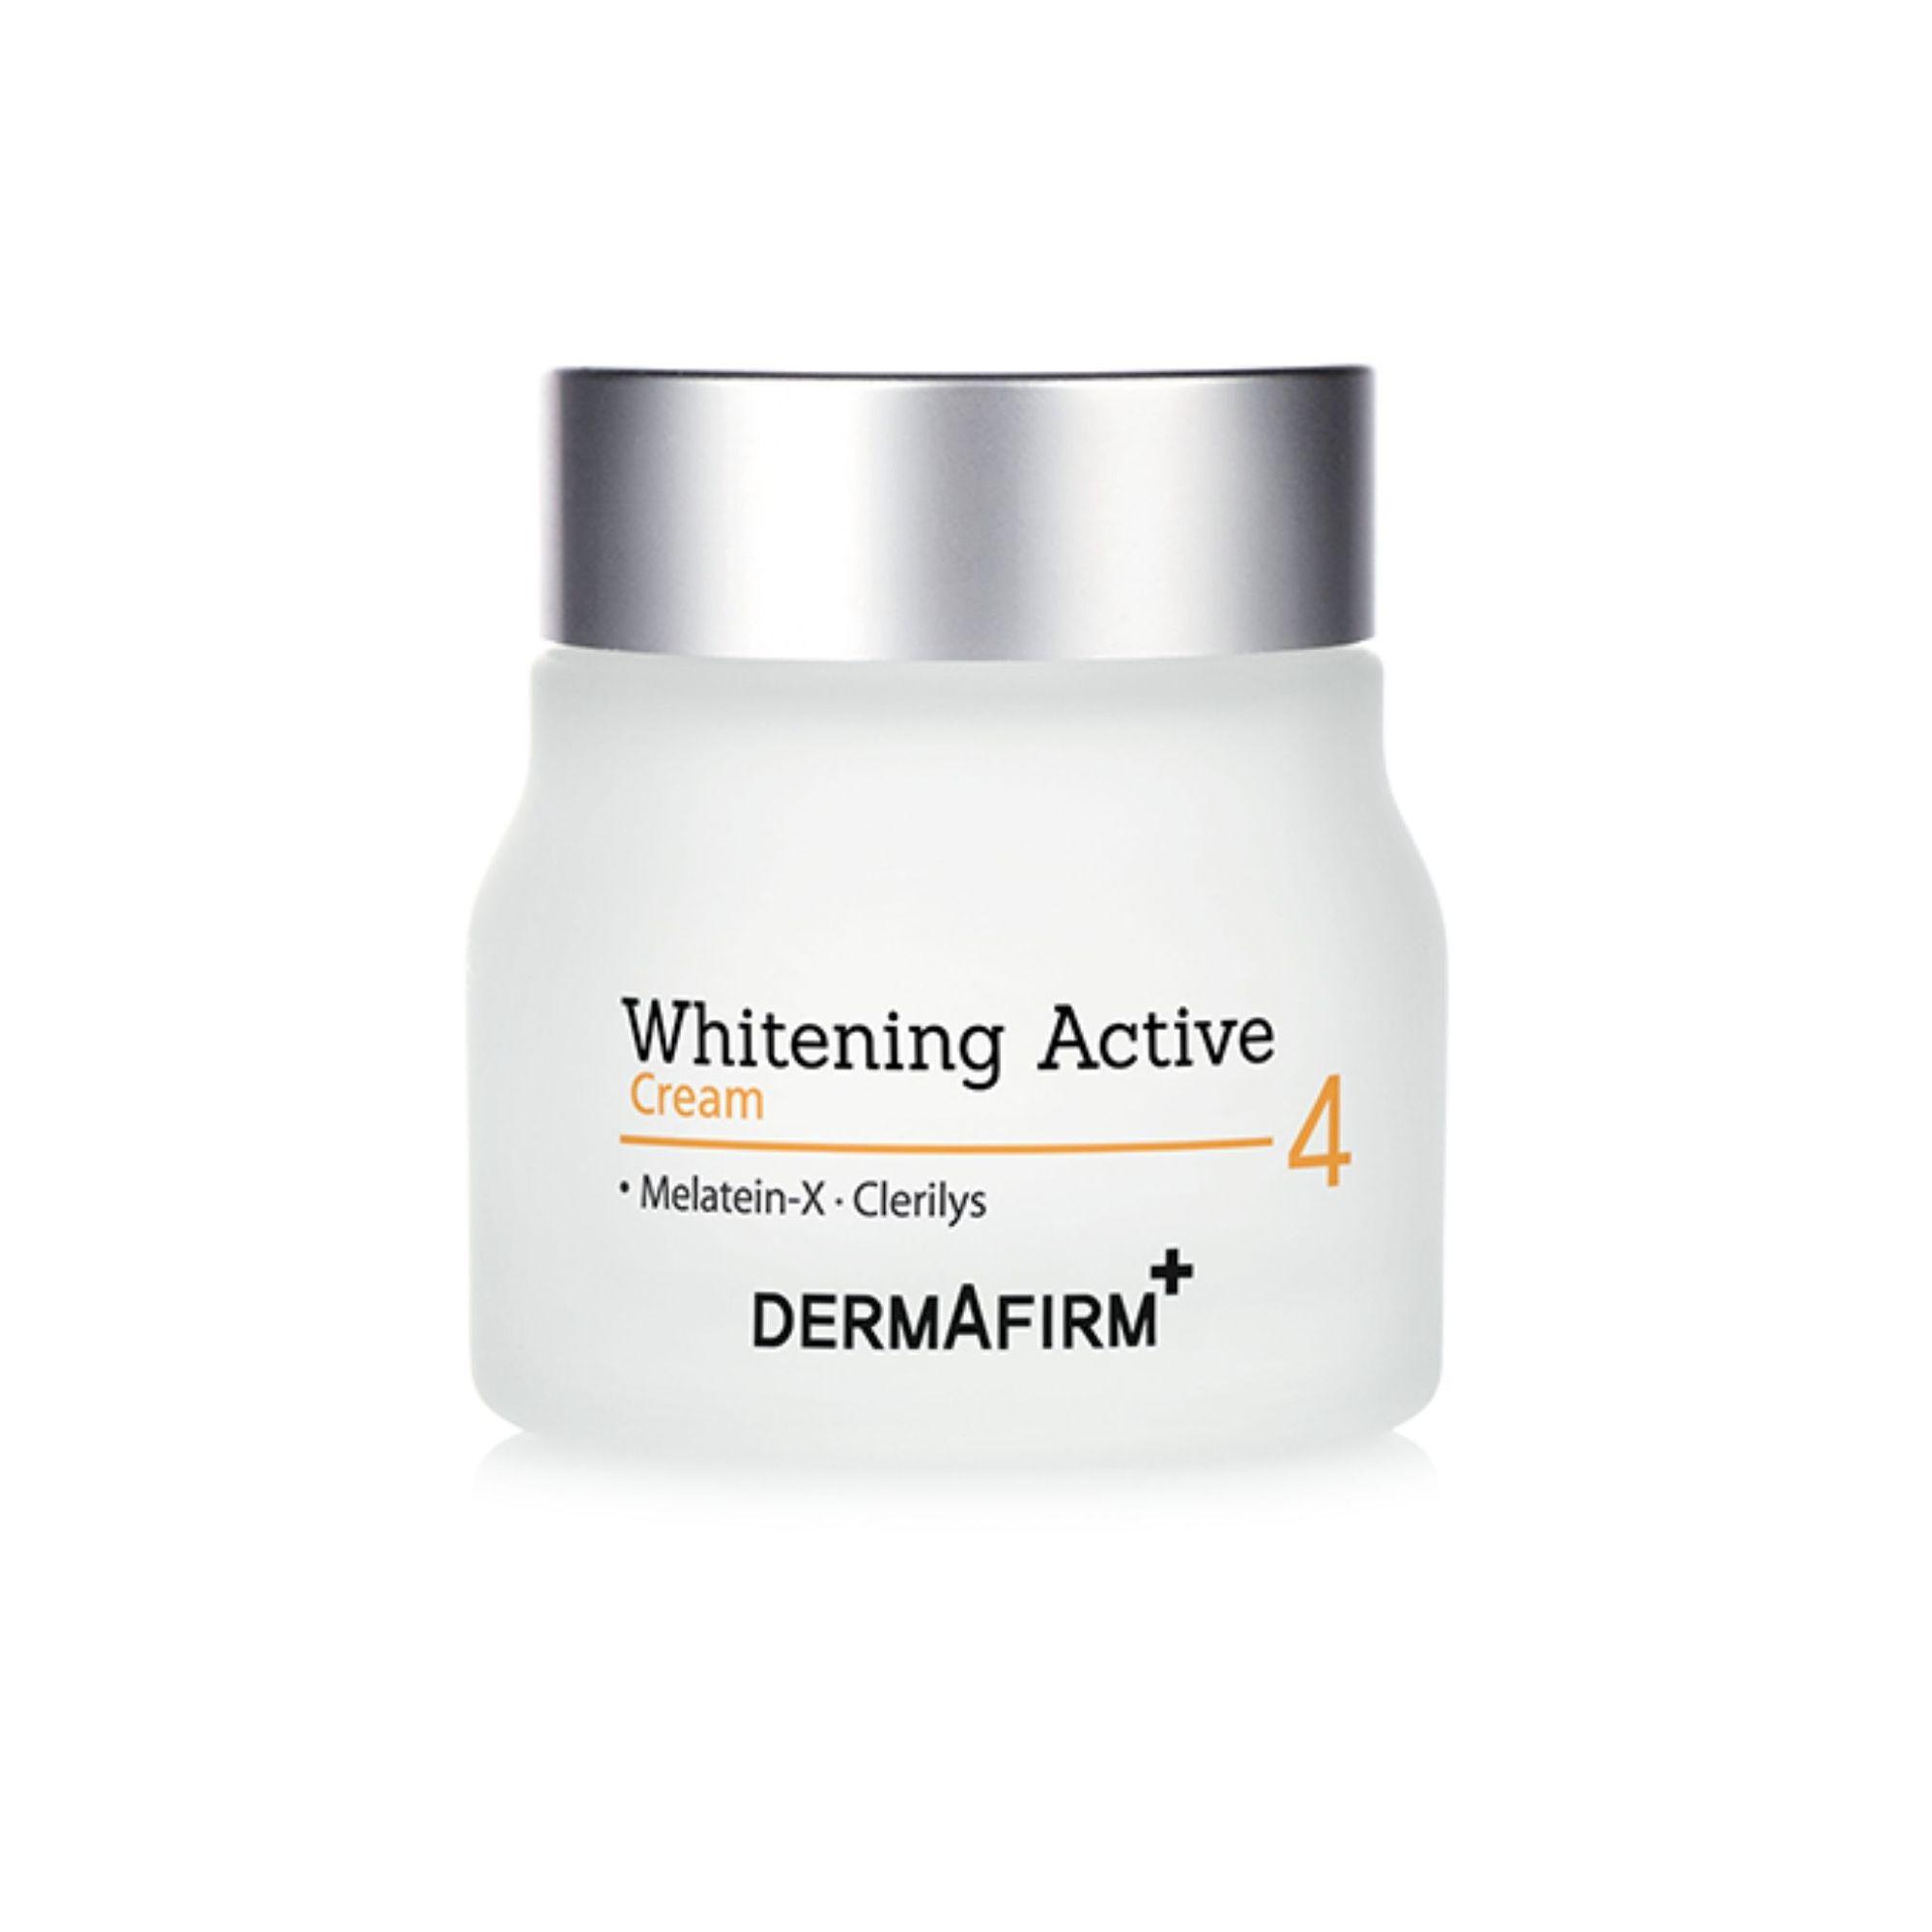 Whitening Active Cream